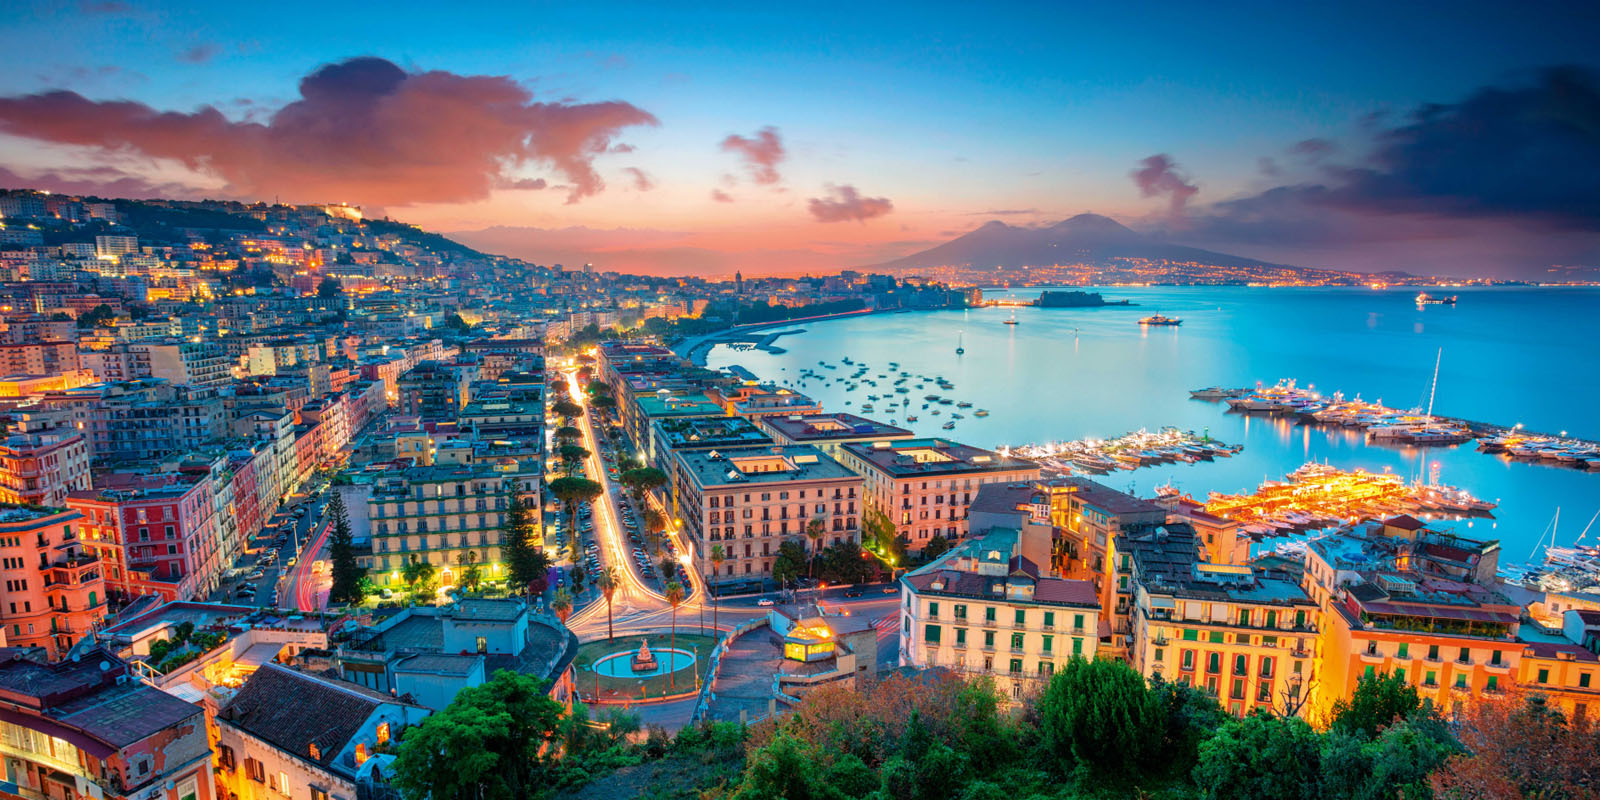 Naples Limousine Services Offers Amalfi Coast Shore Excursions with Friendly Drivers